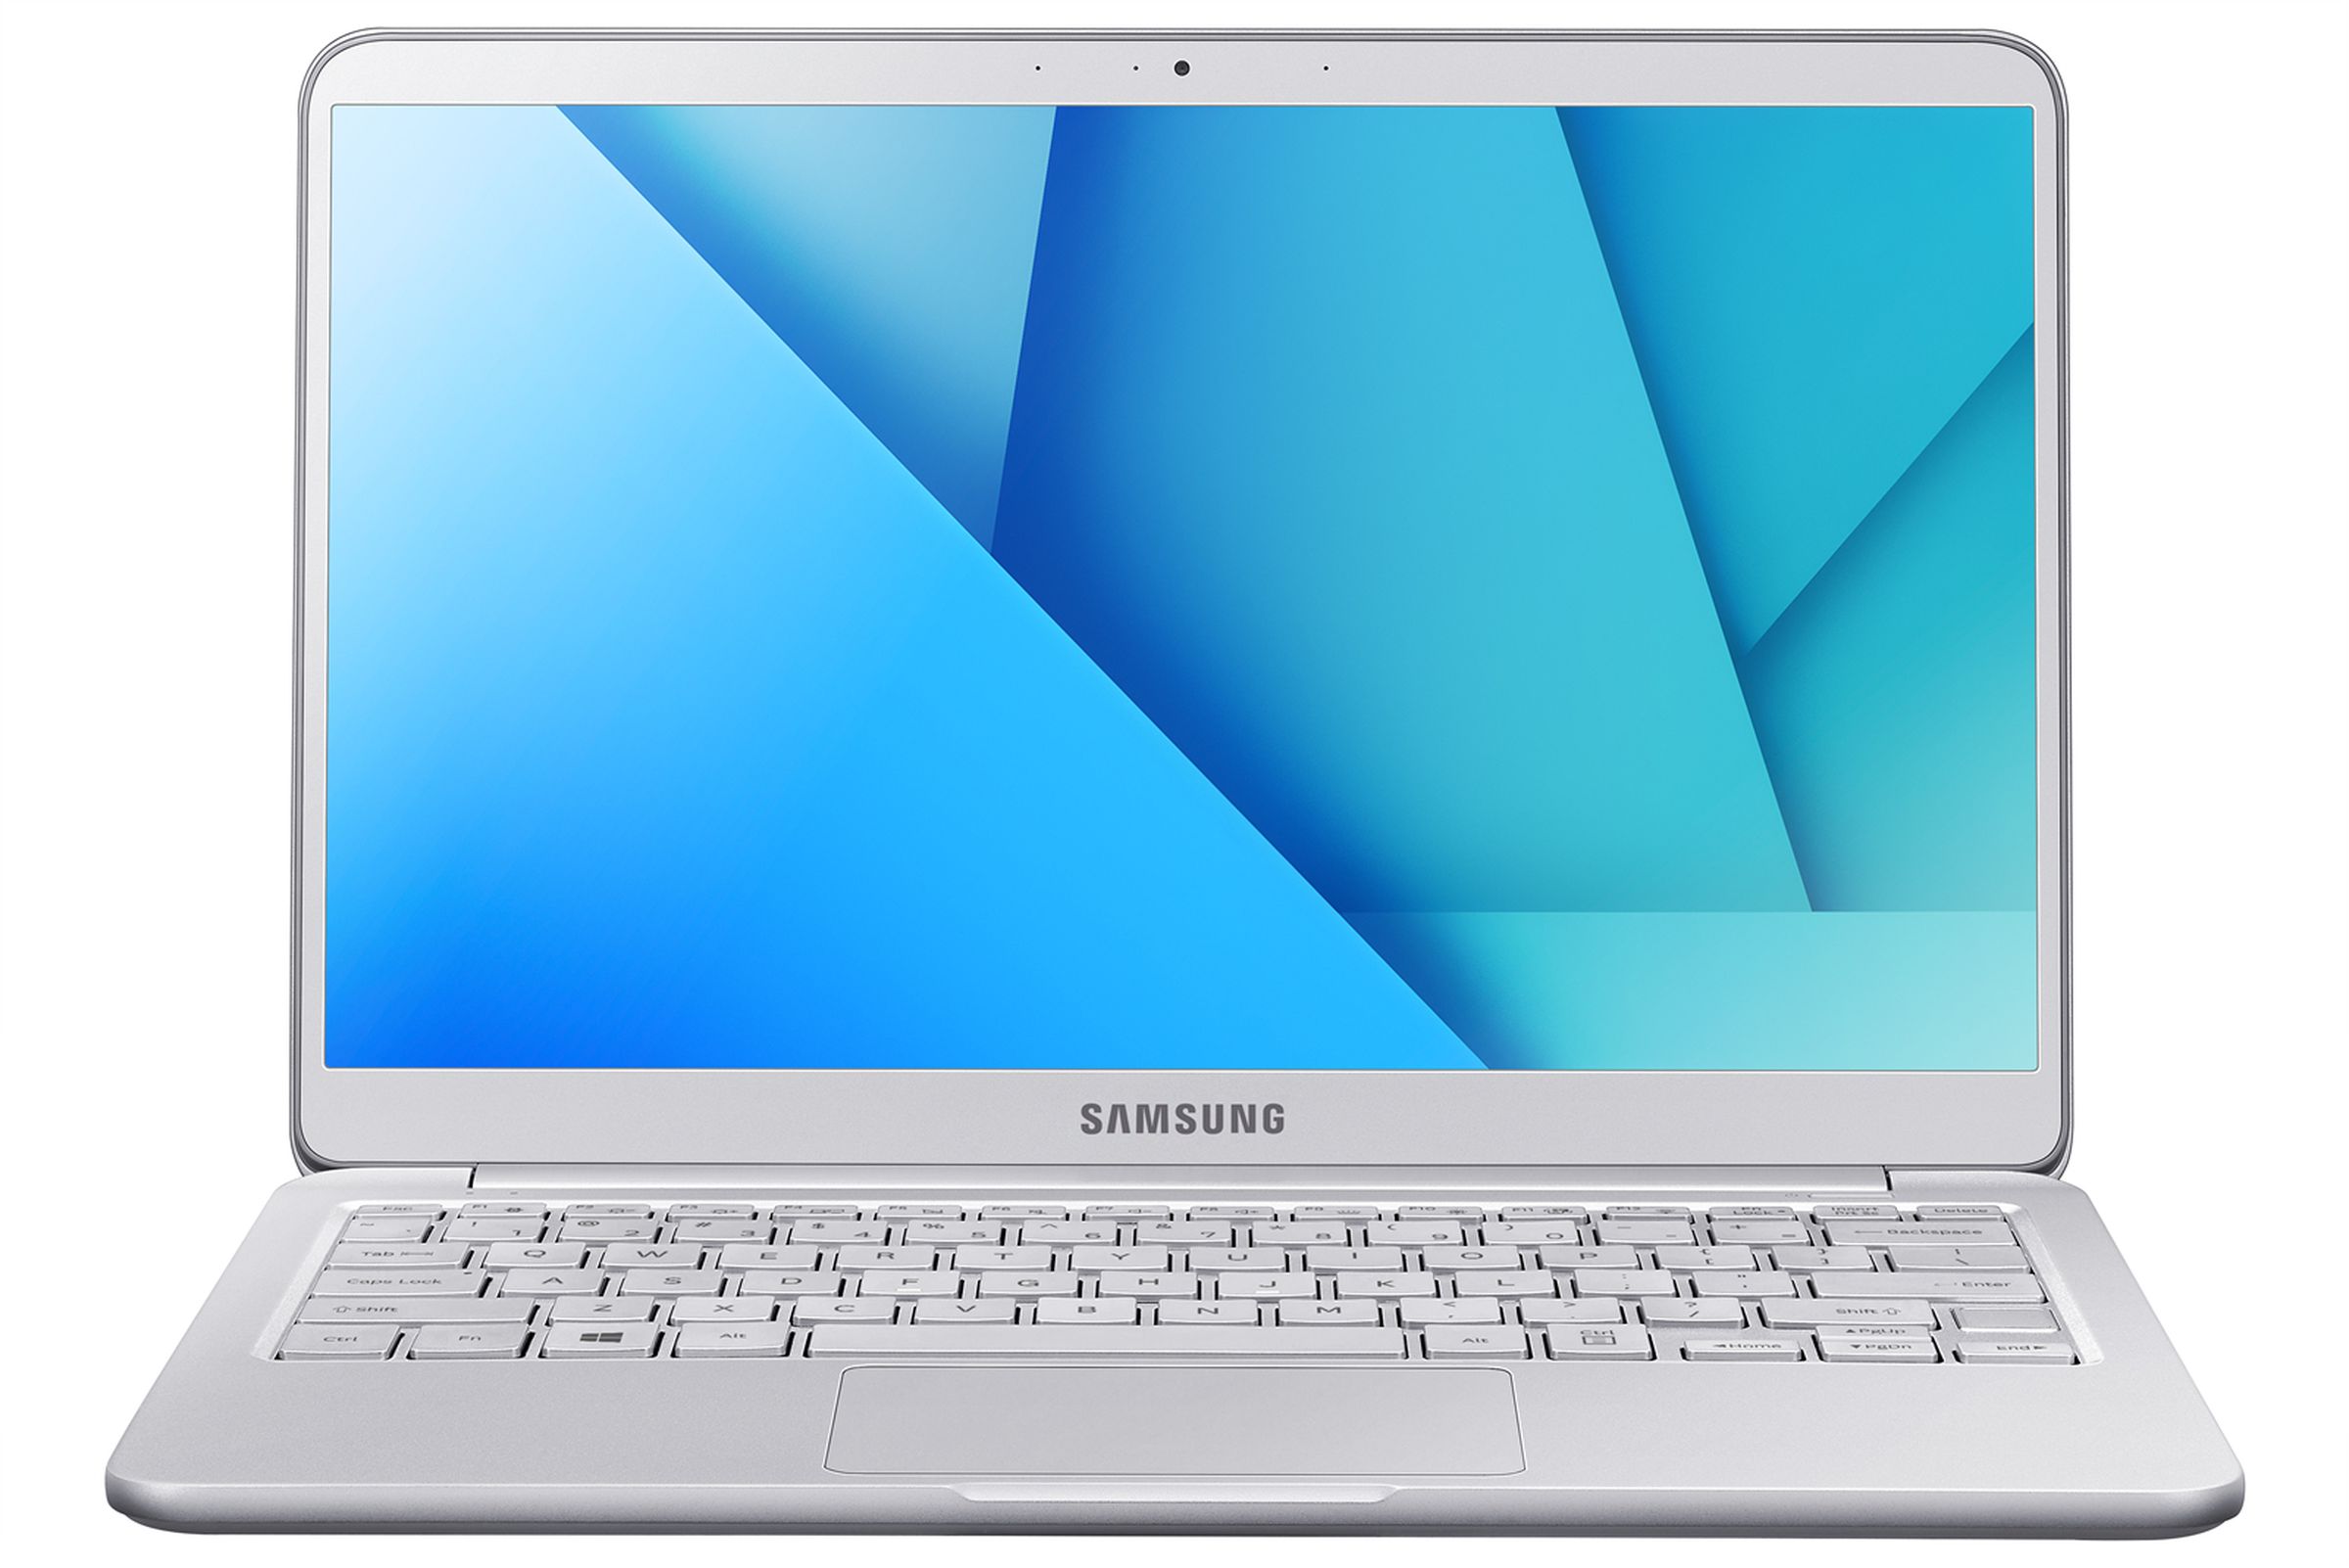 Samsung Notebook 9 (late 2016) press photos